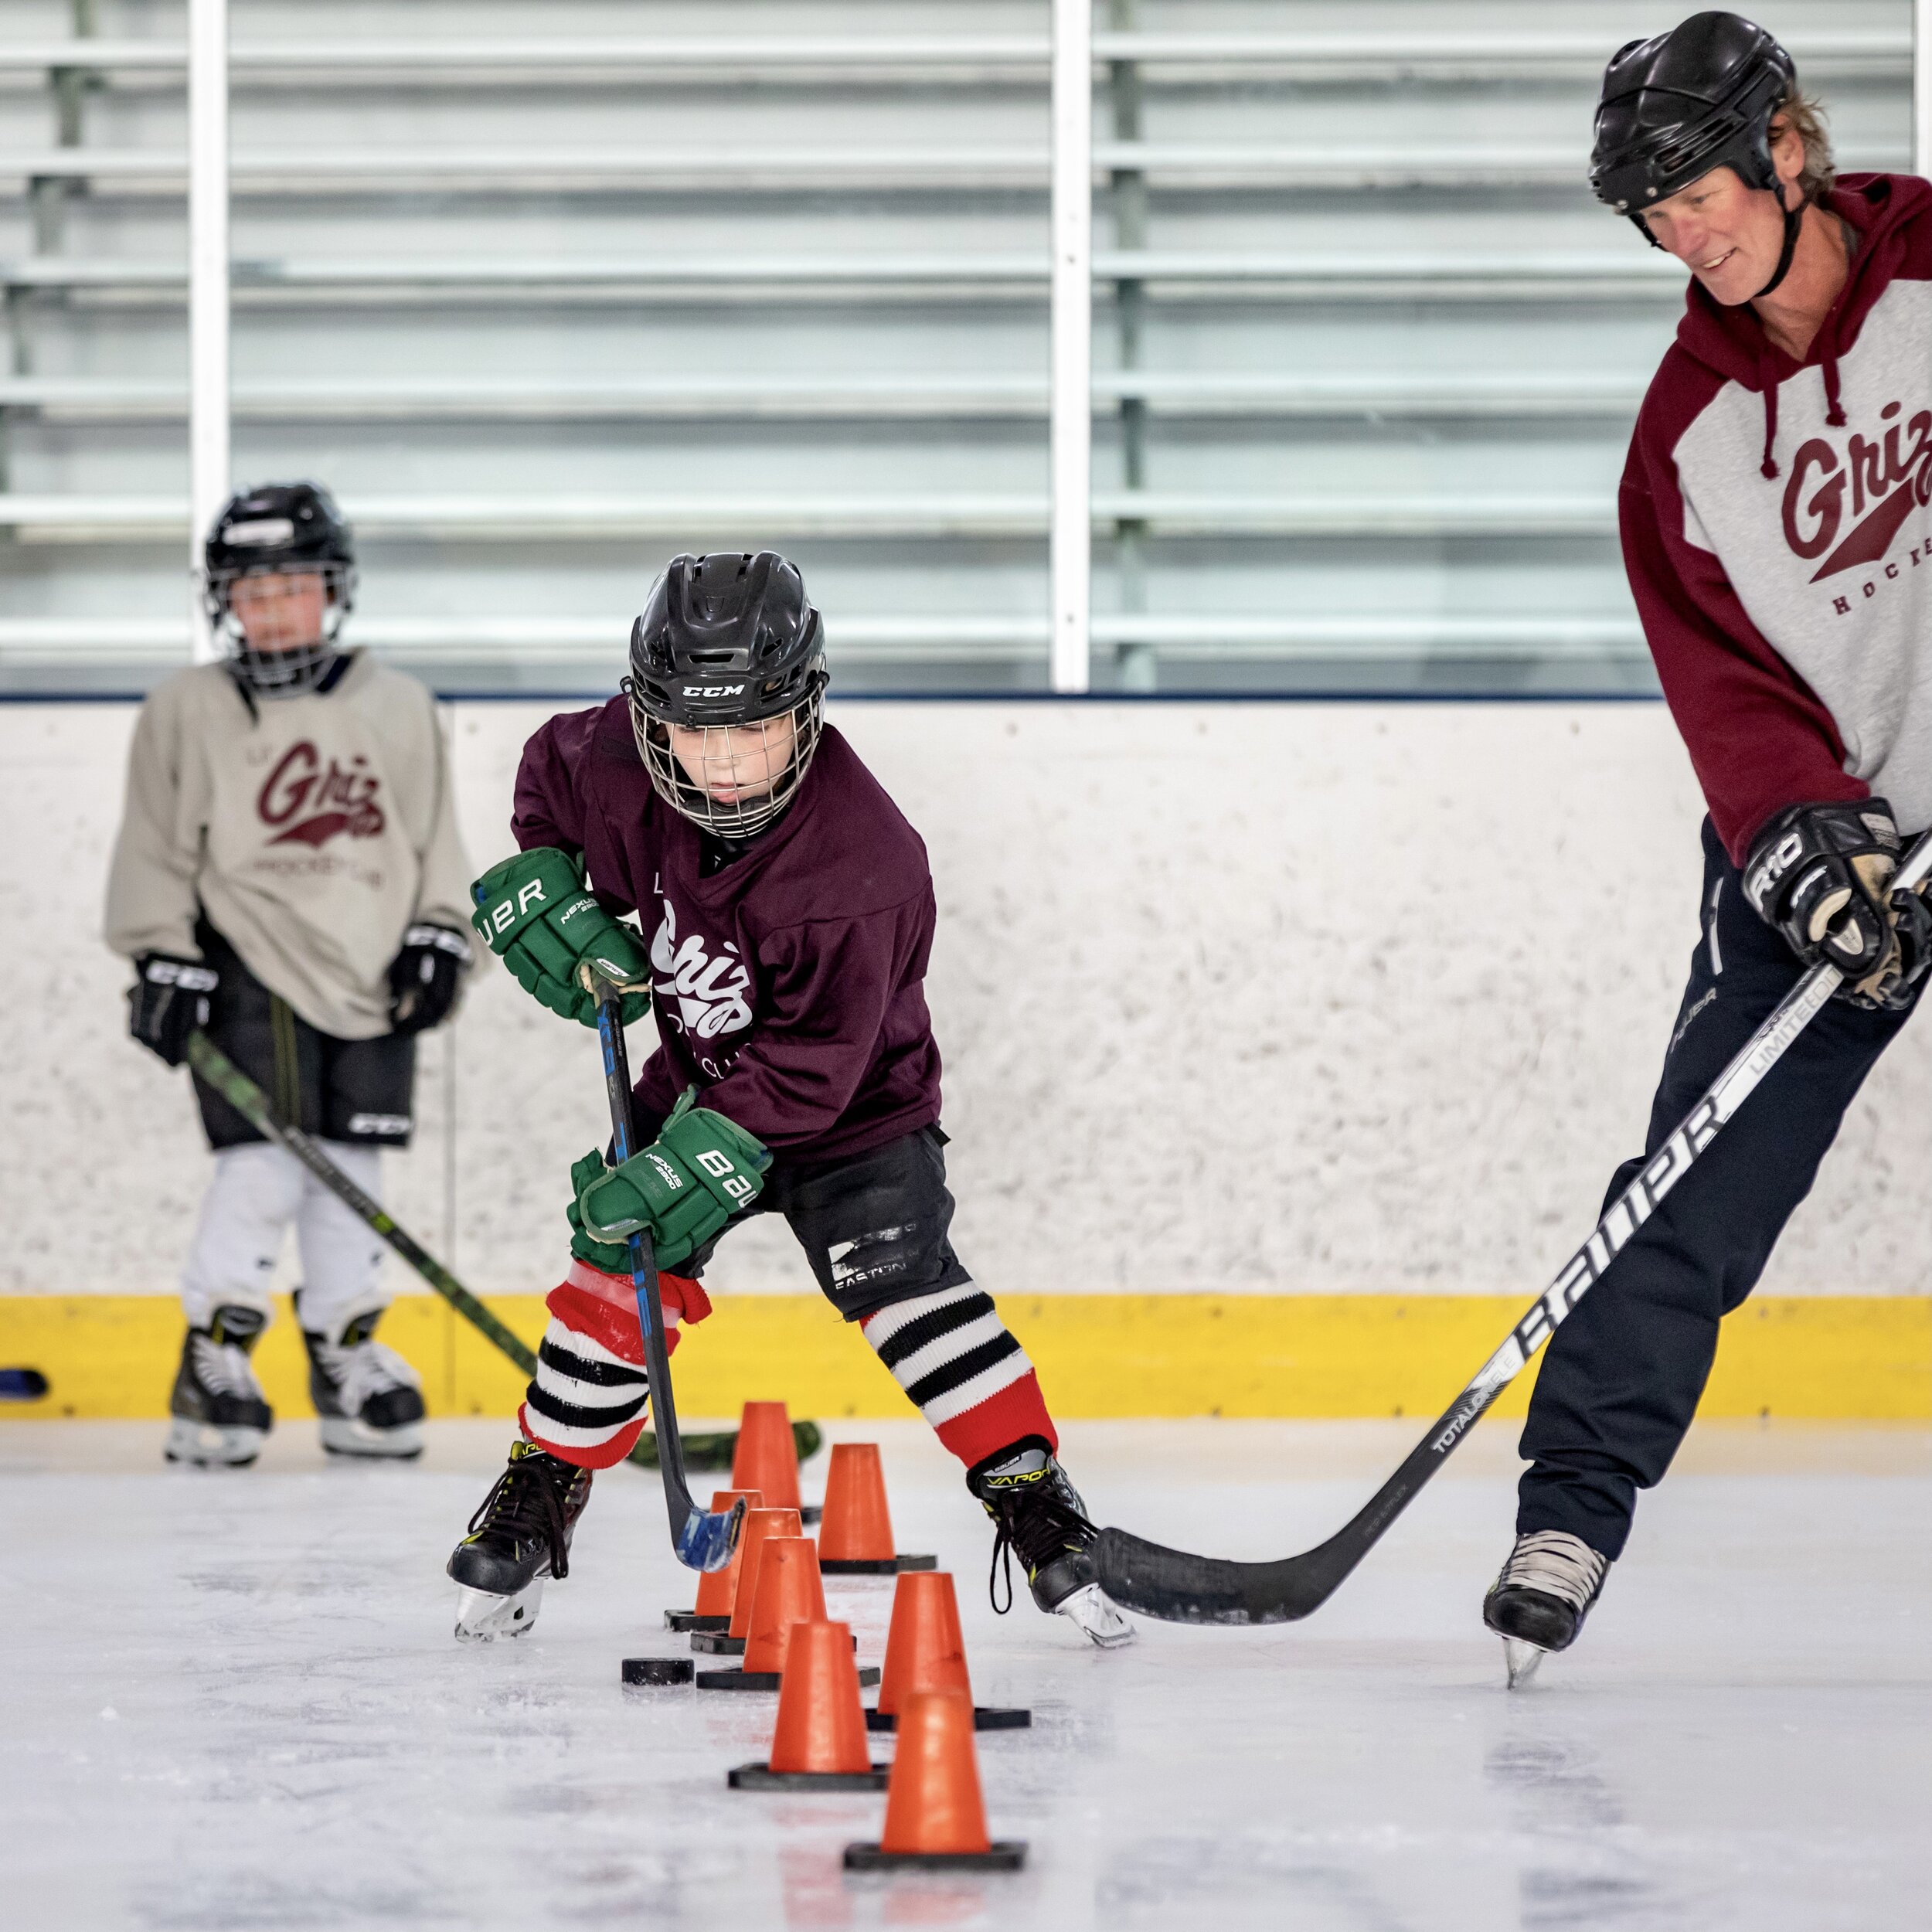 Lil Griz After School Camp — University of Montana Hockey